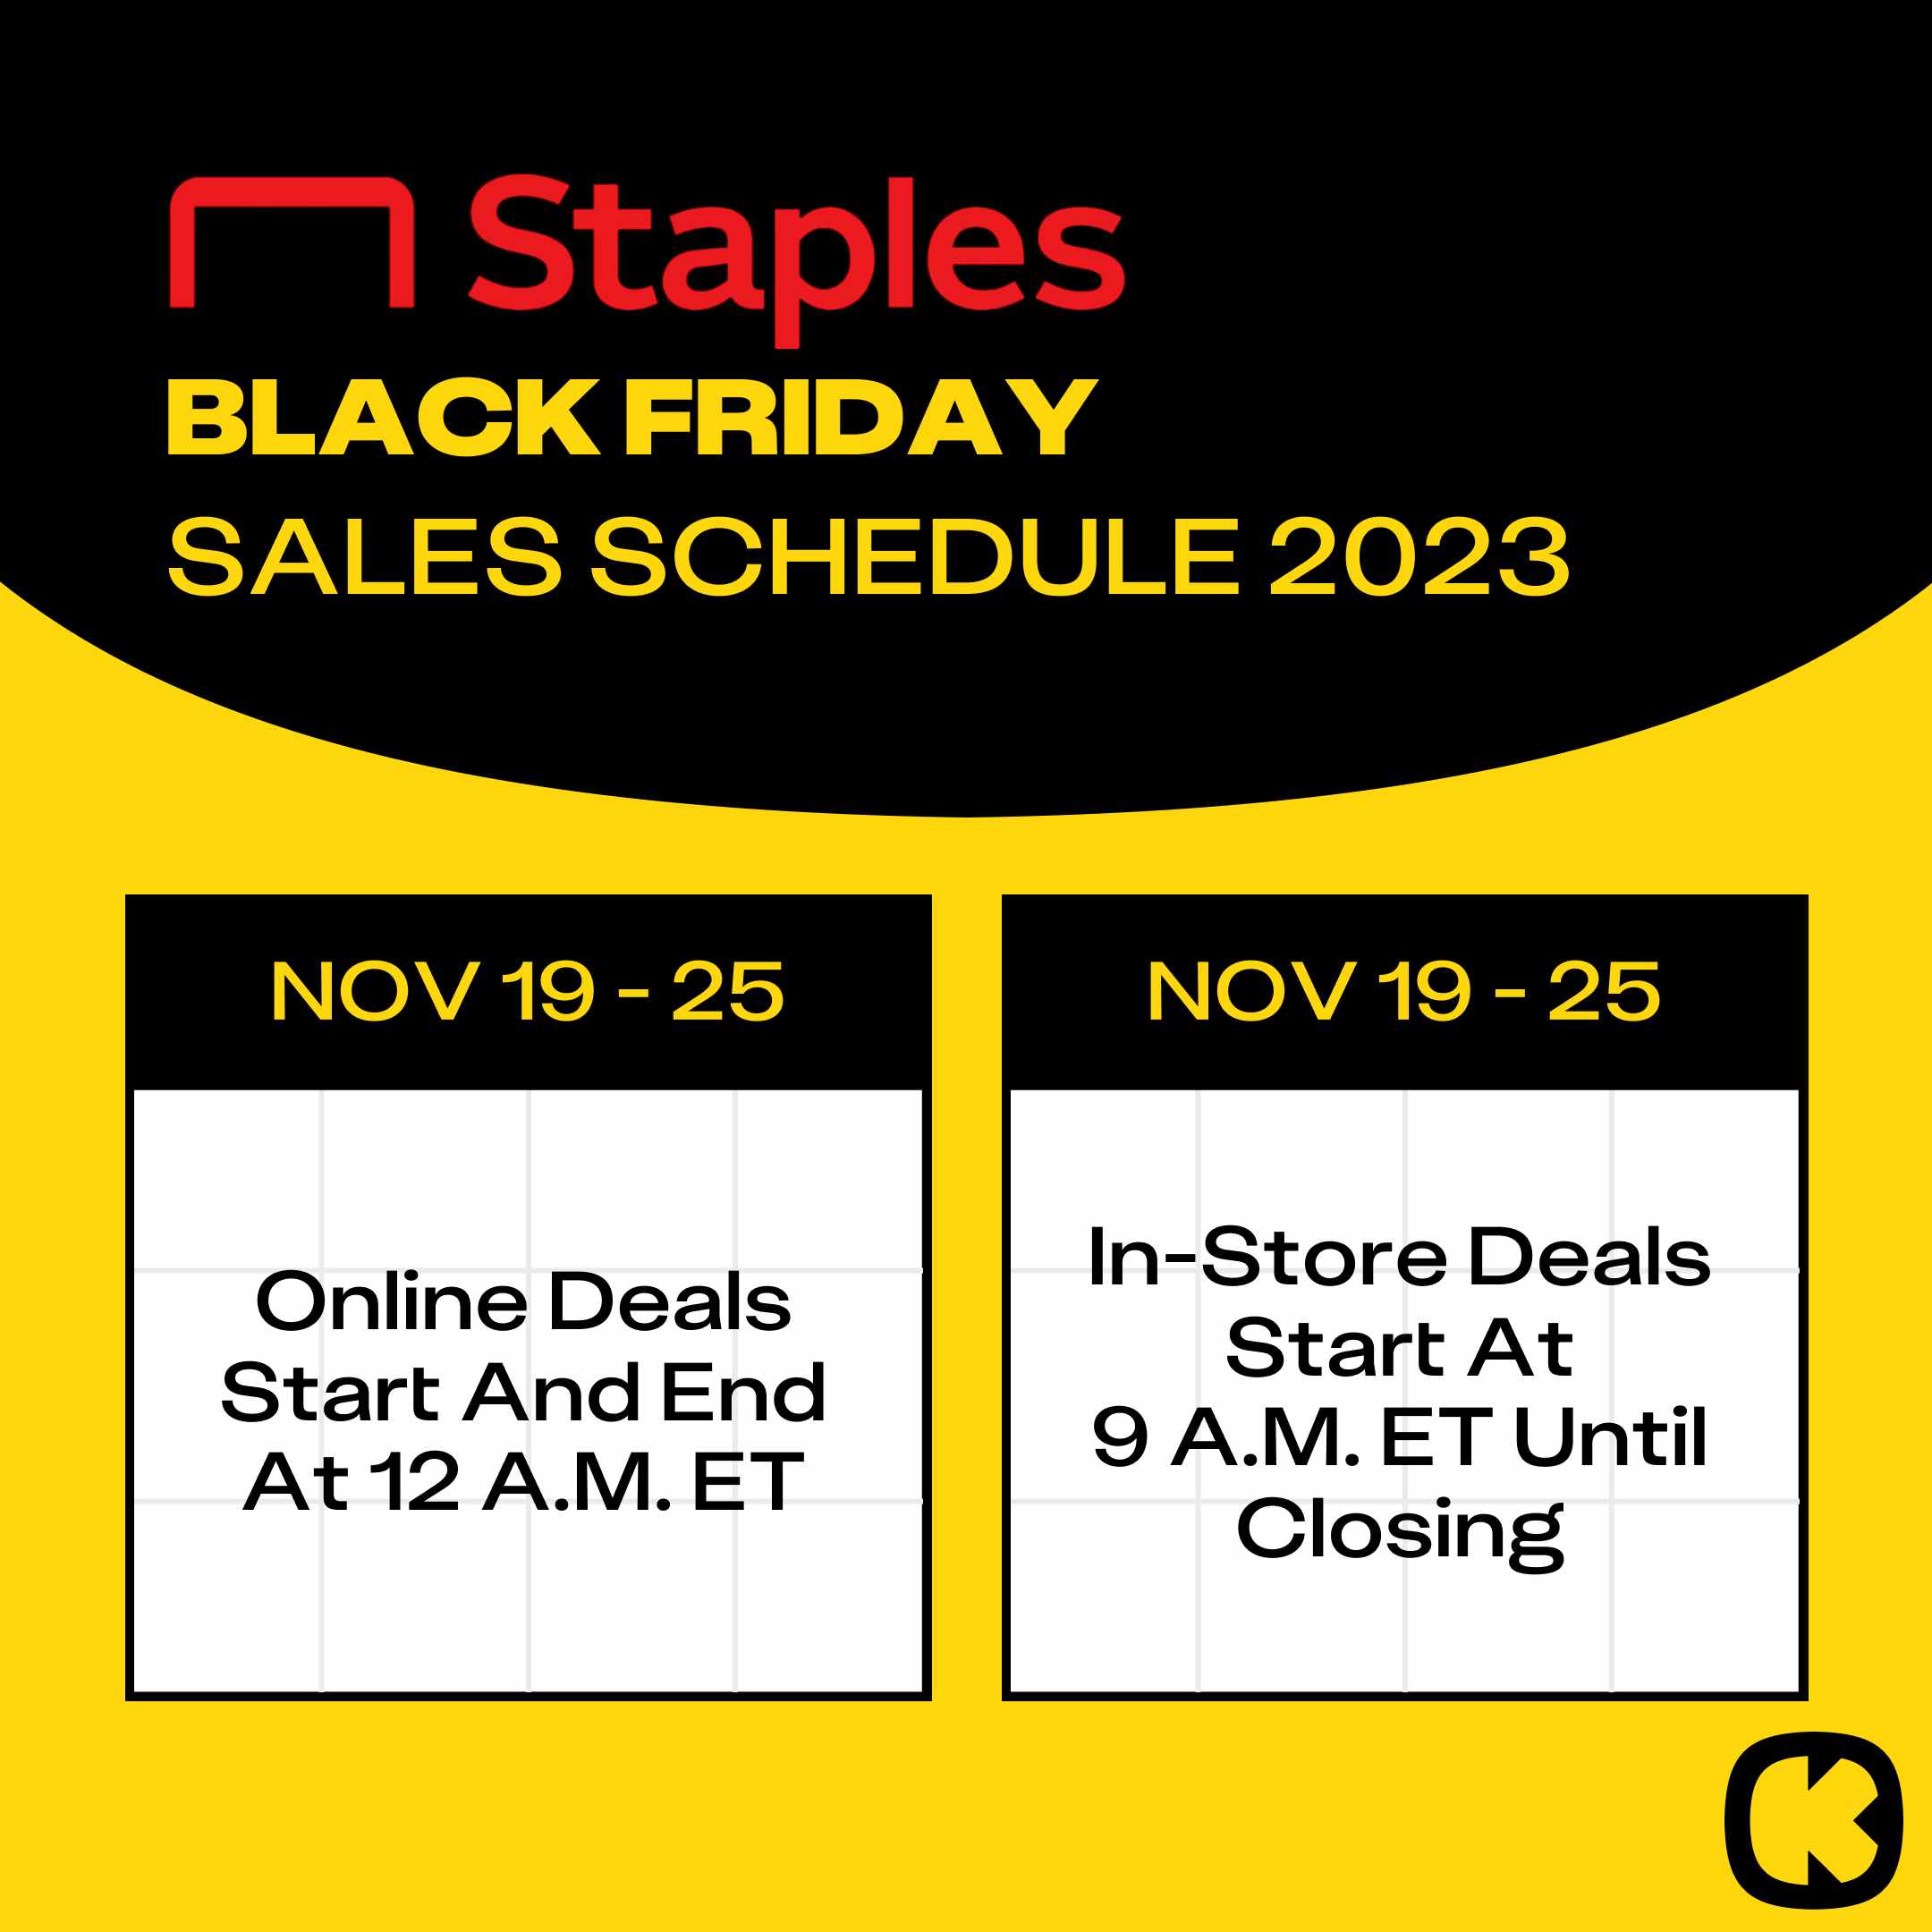 staples black friday schedule graphic